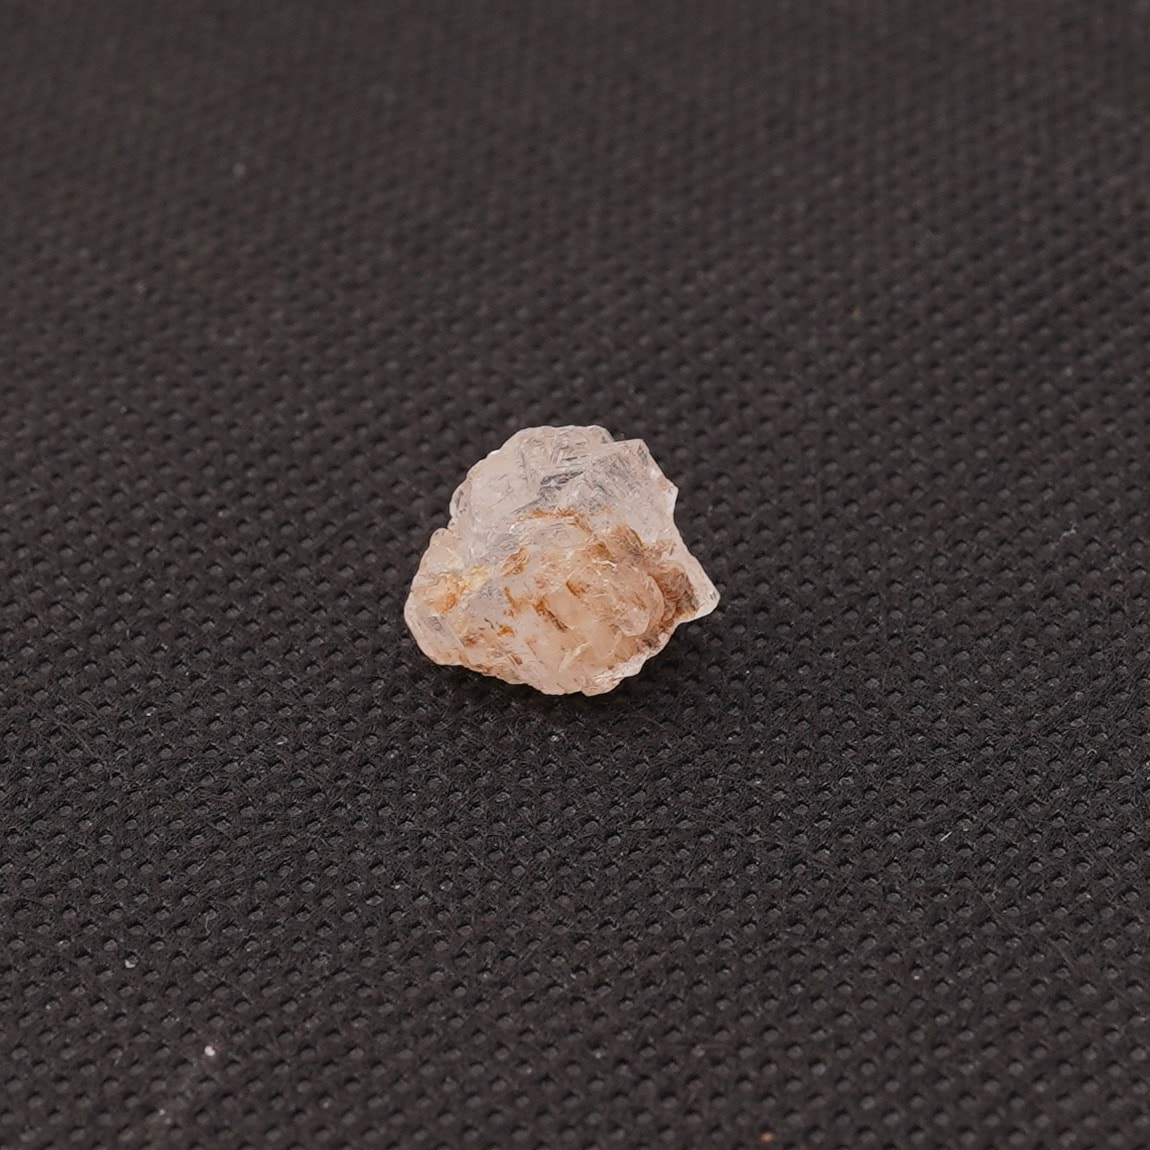 Fenacit nigerian cristal natural unicat f65